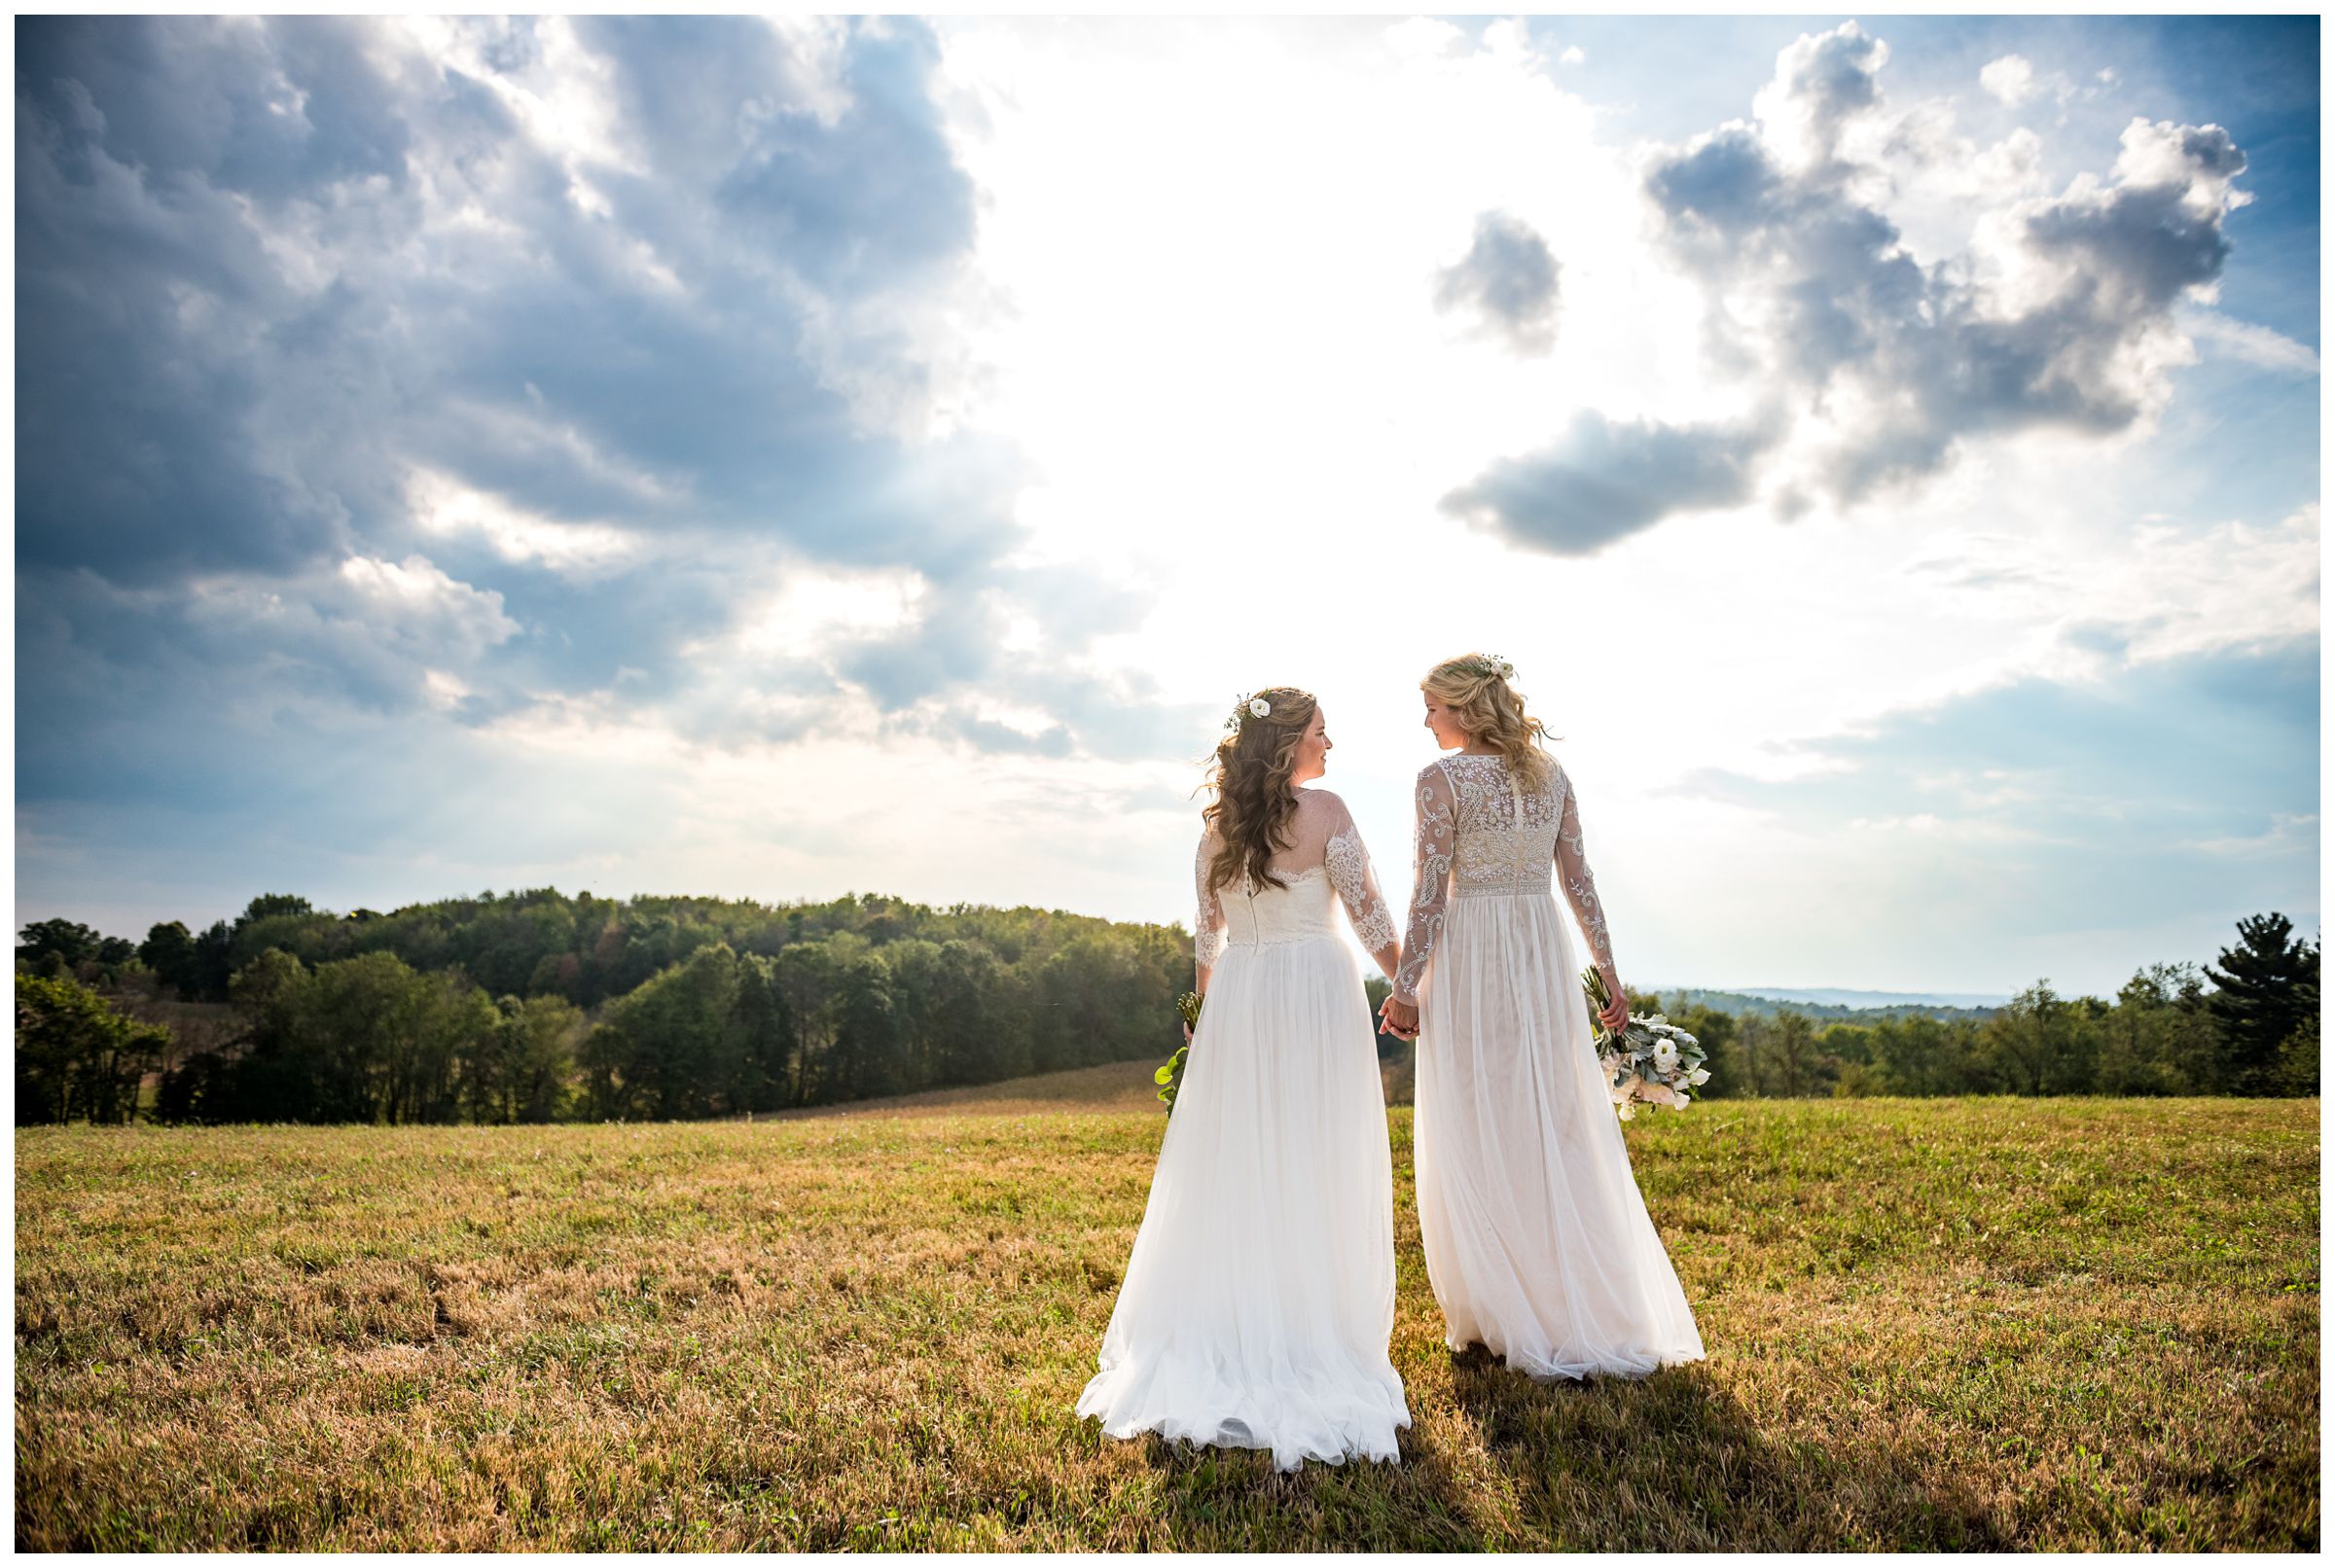 LGBTQ same-sex wedding portraits with two brides on hilltop after farm wedding ceremony.